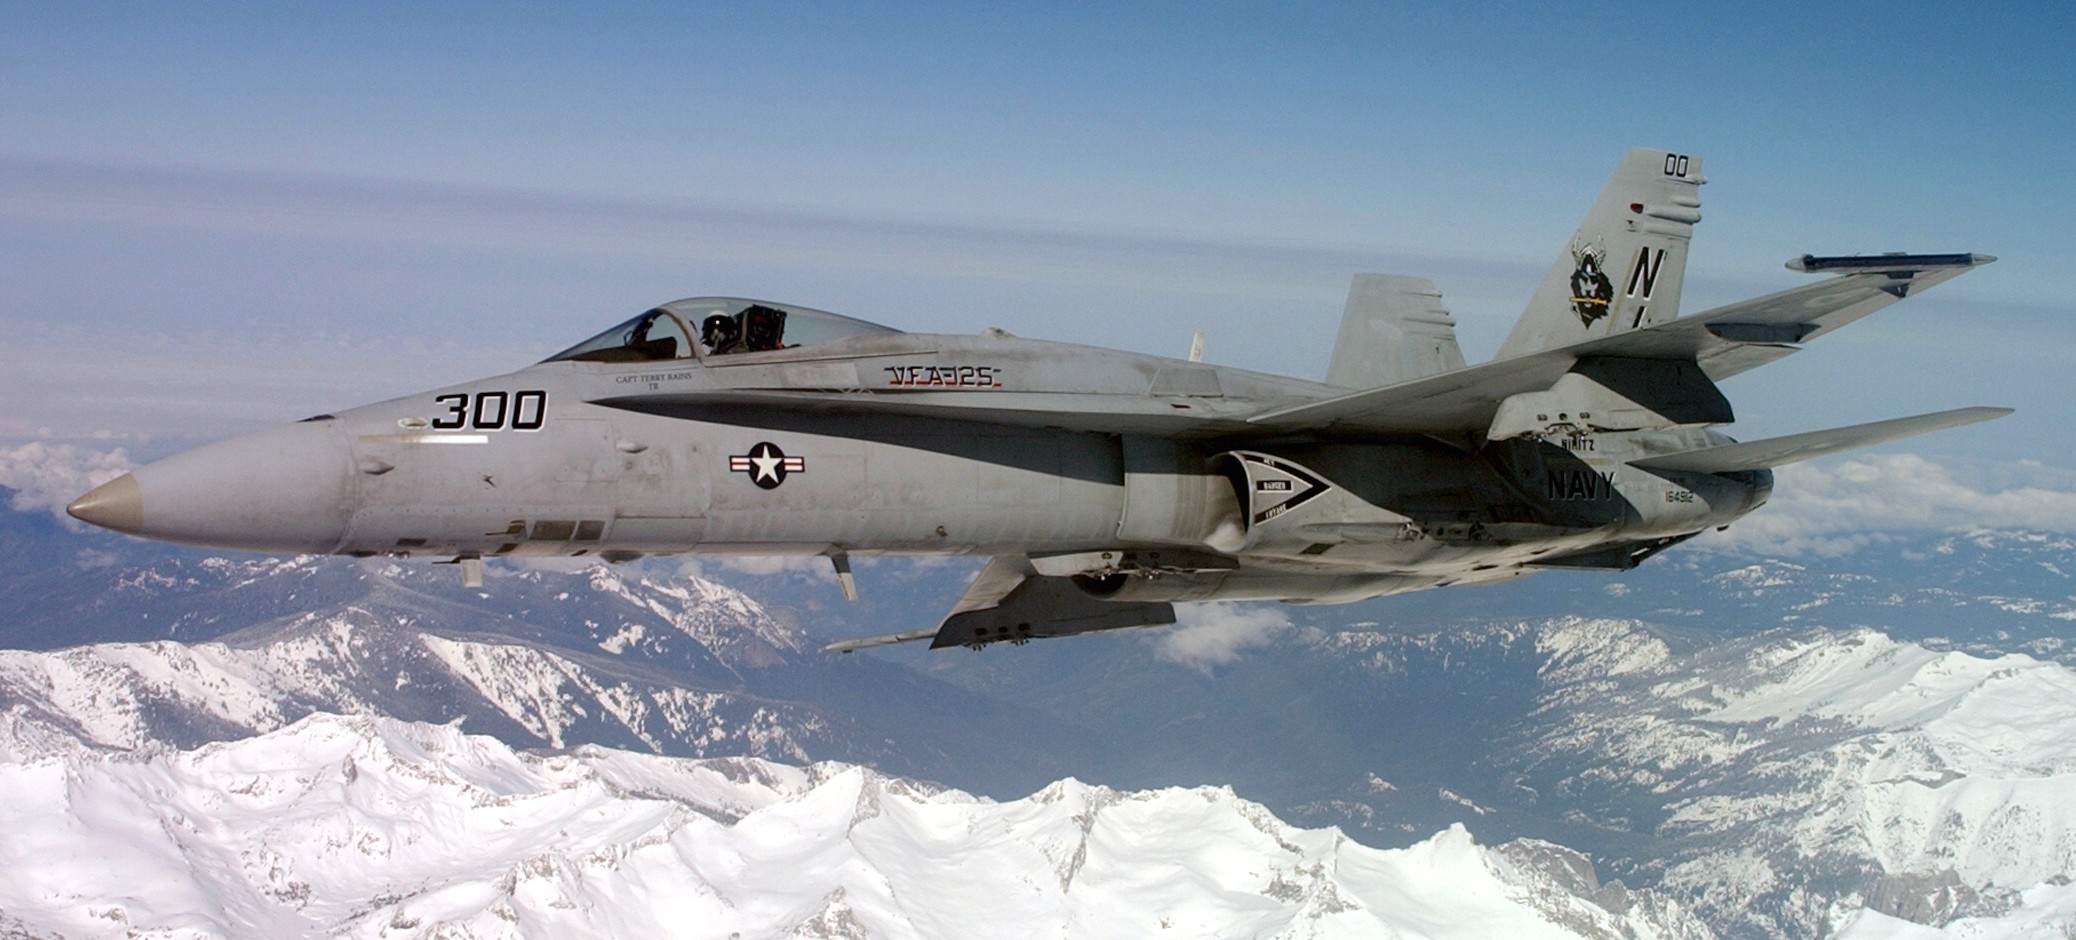 vfa-125 rough raiders strike fighter squadron f/a-18c hornet 2003 06